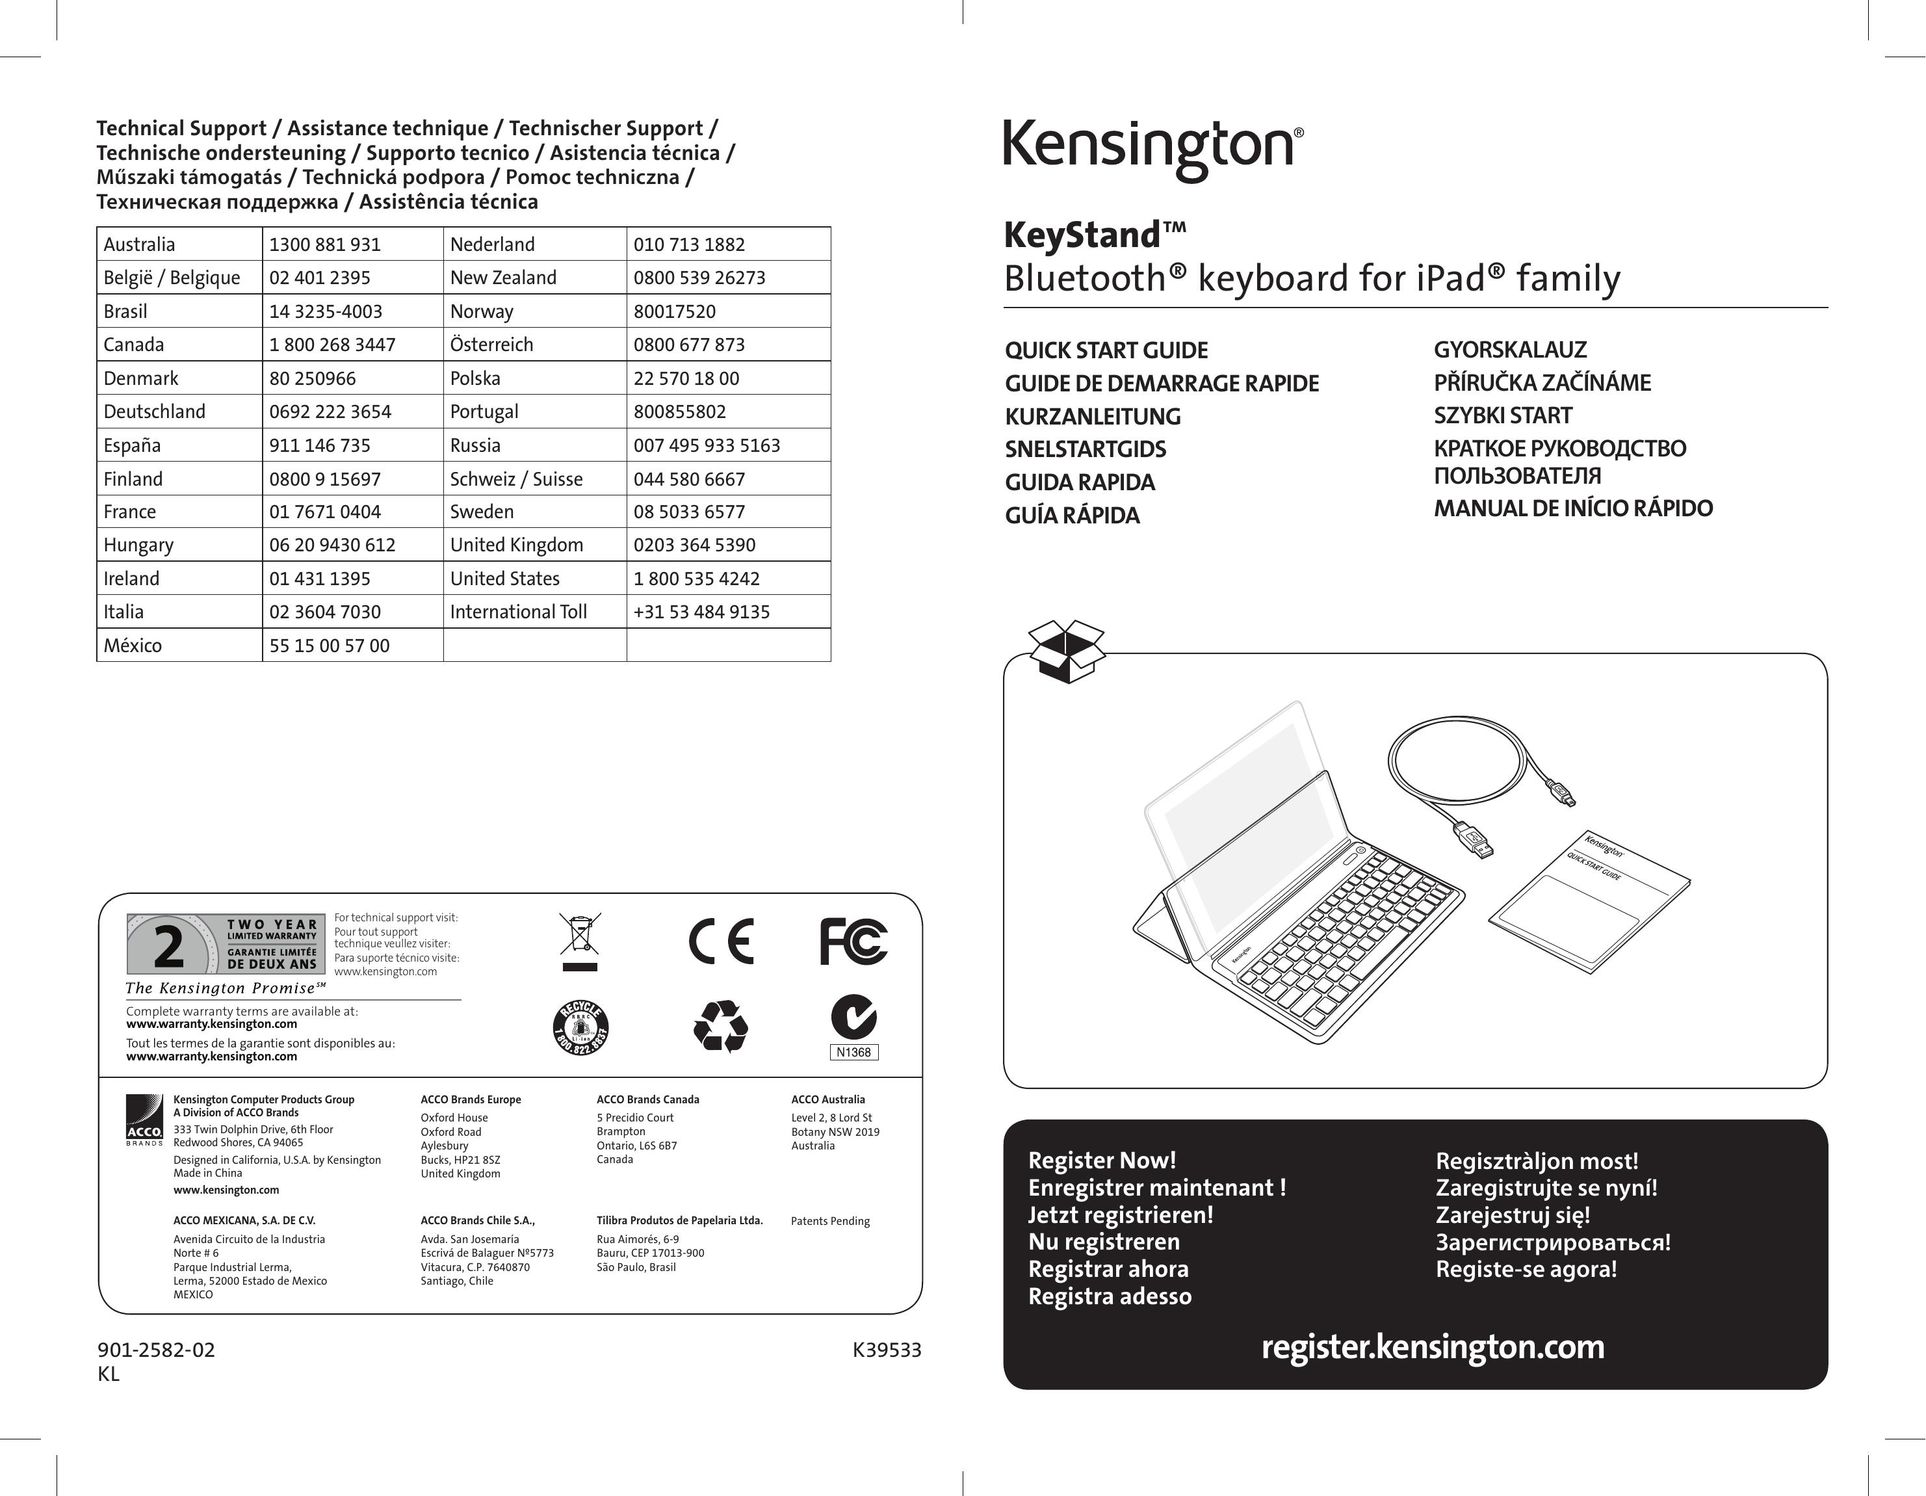 Kensington K39533 Tablet Accessory User Manual